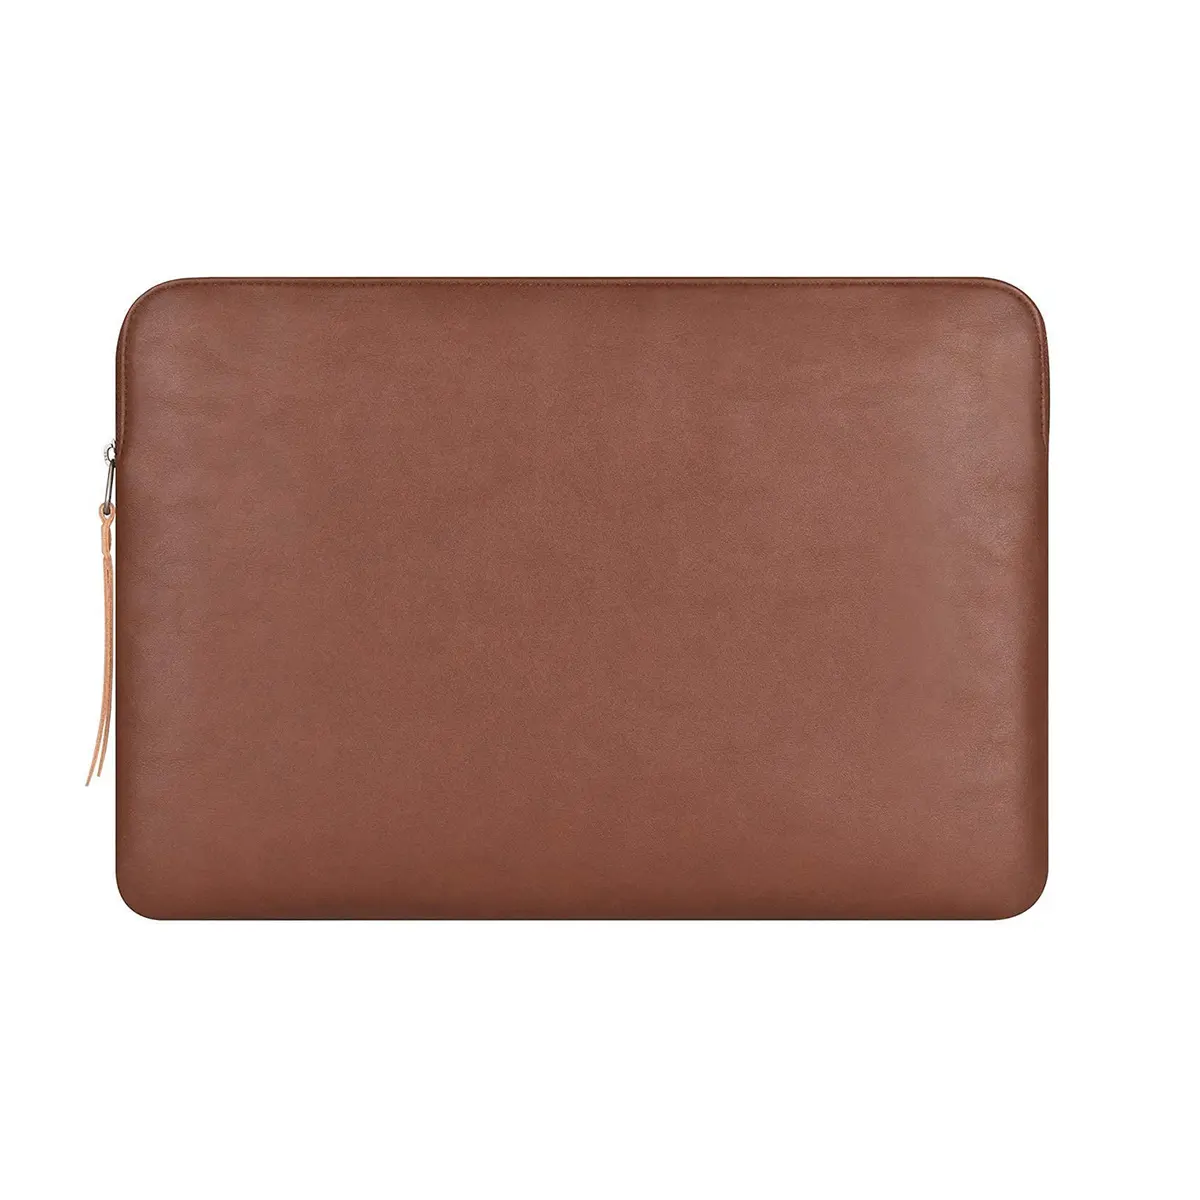 Laptop Bag Black PU Leather Padded Bag Waterproof Case 13 Inch Tablet Laptop Sleeve Bag